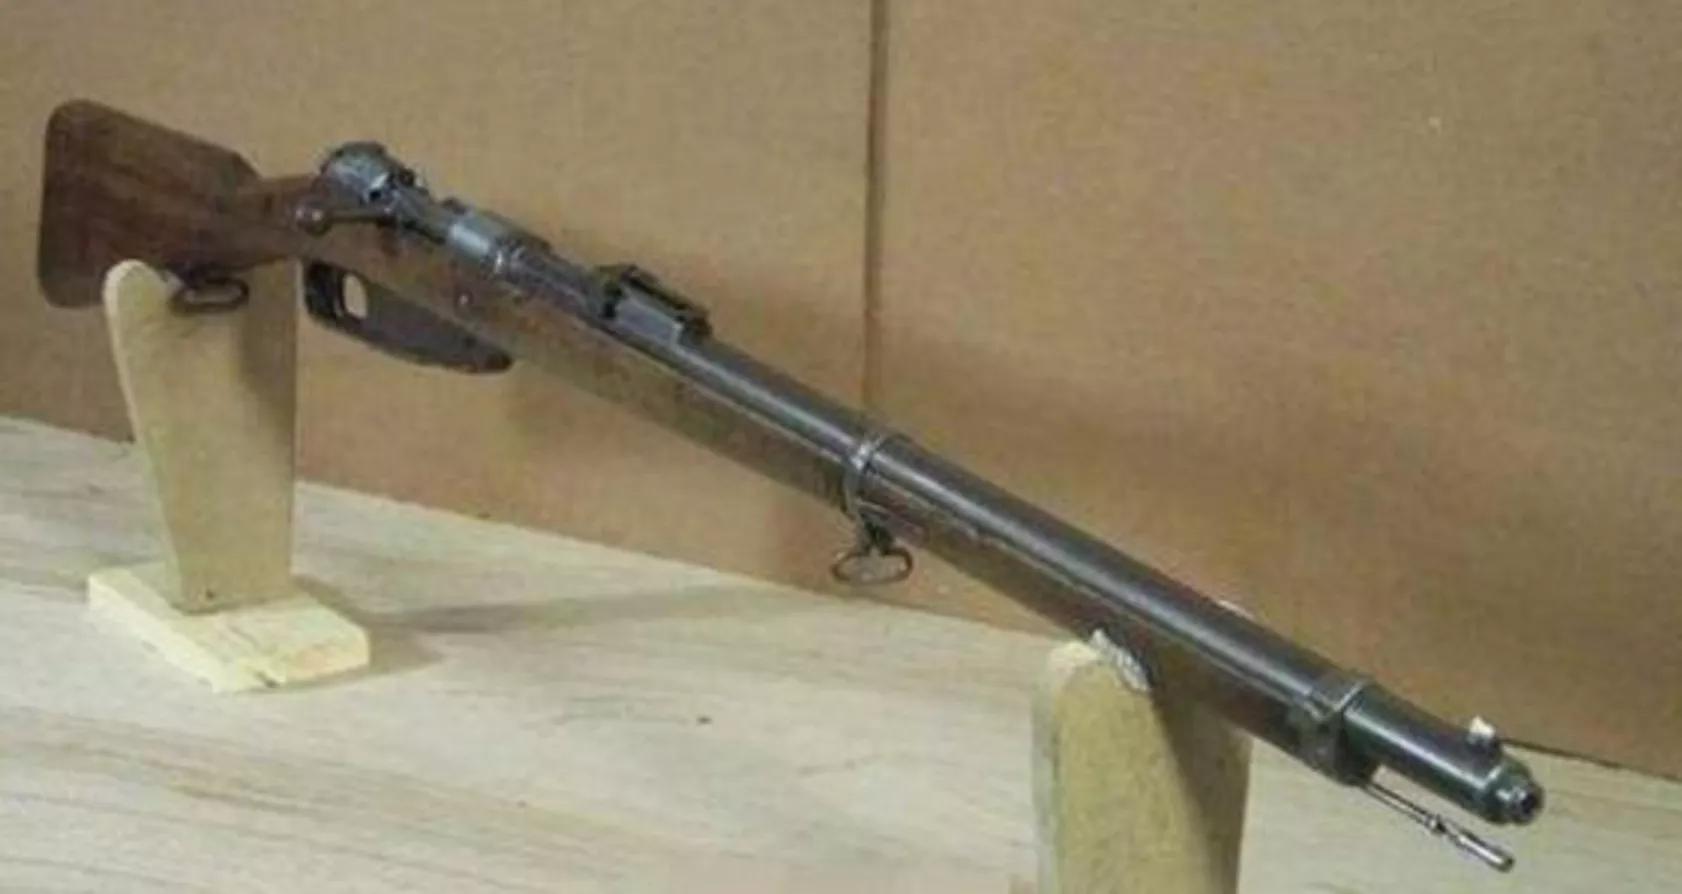 m1917rsc半自动步枪是法国研制出的步枪,在一战爆发的时候法国就是